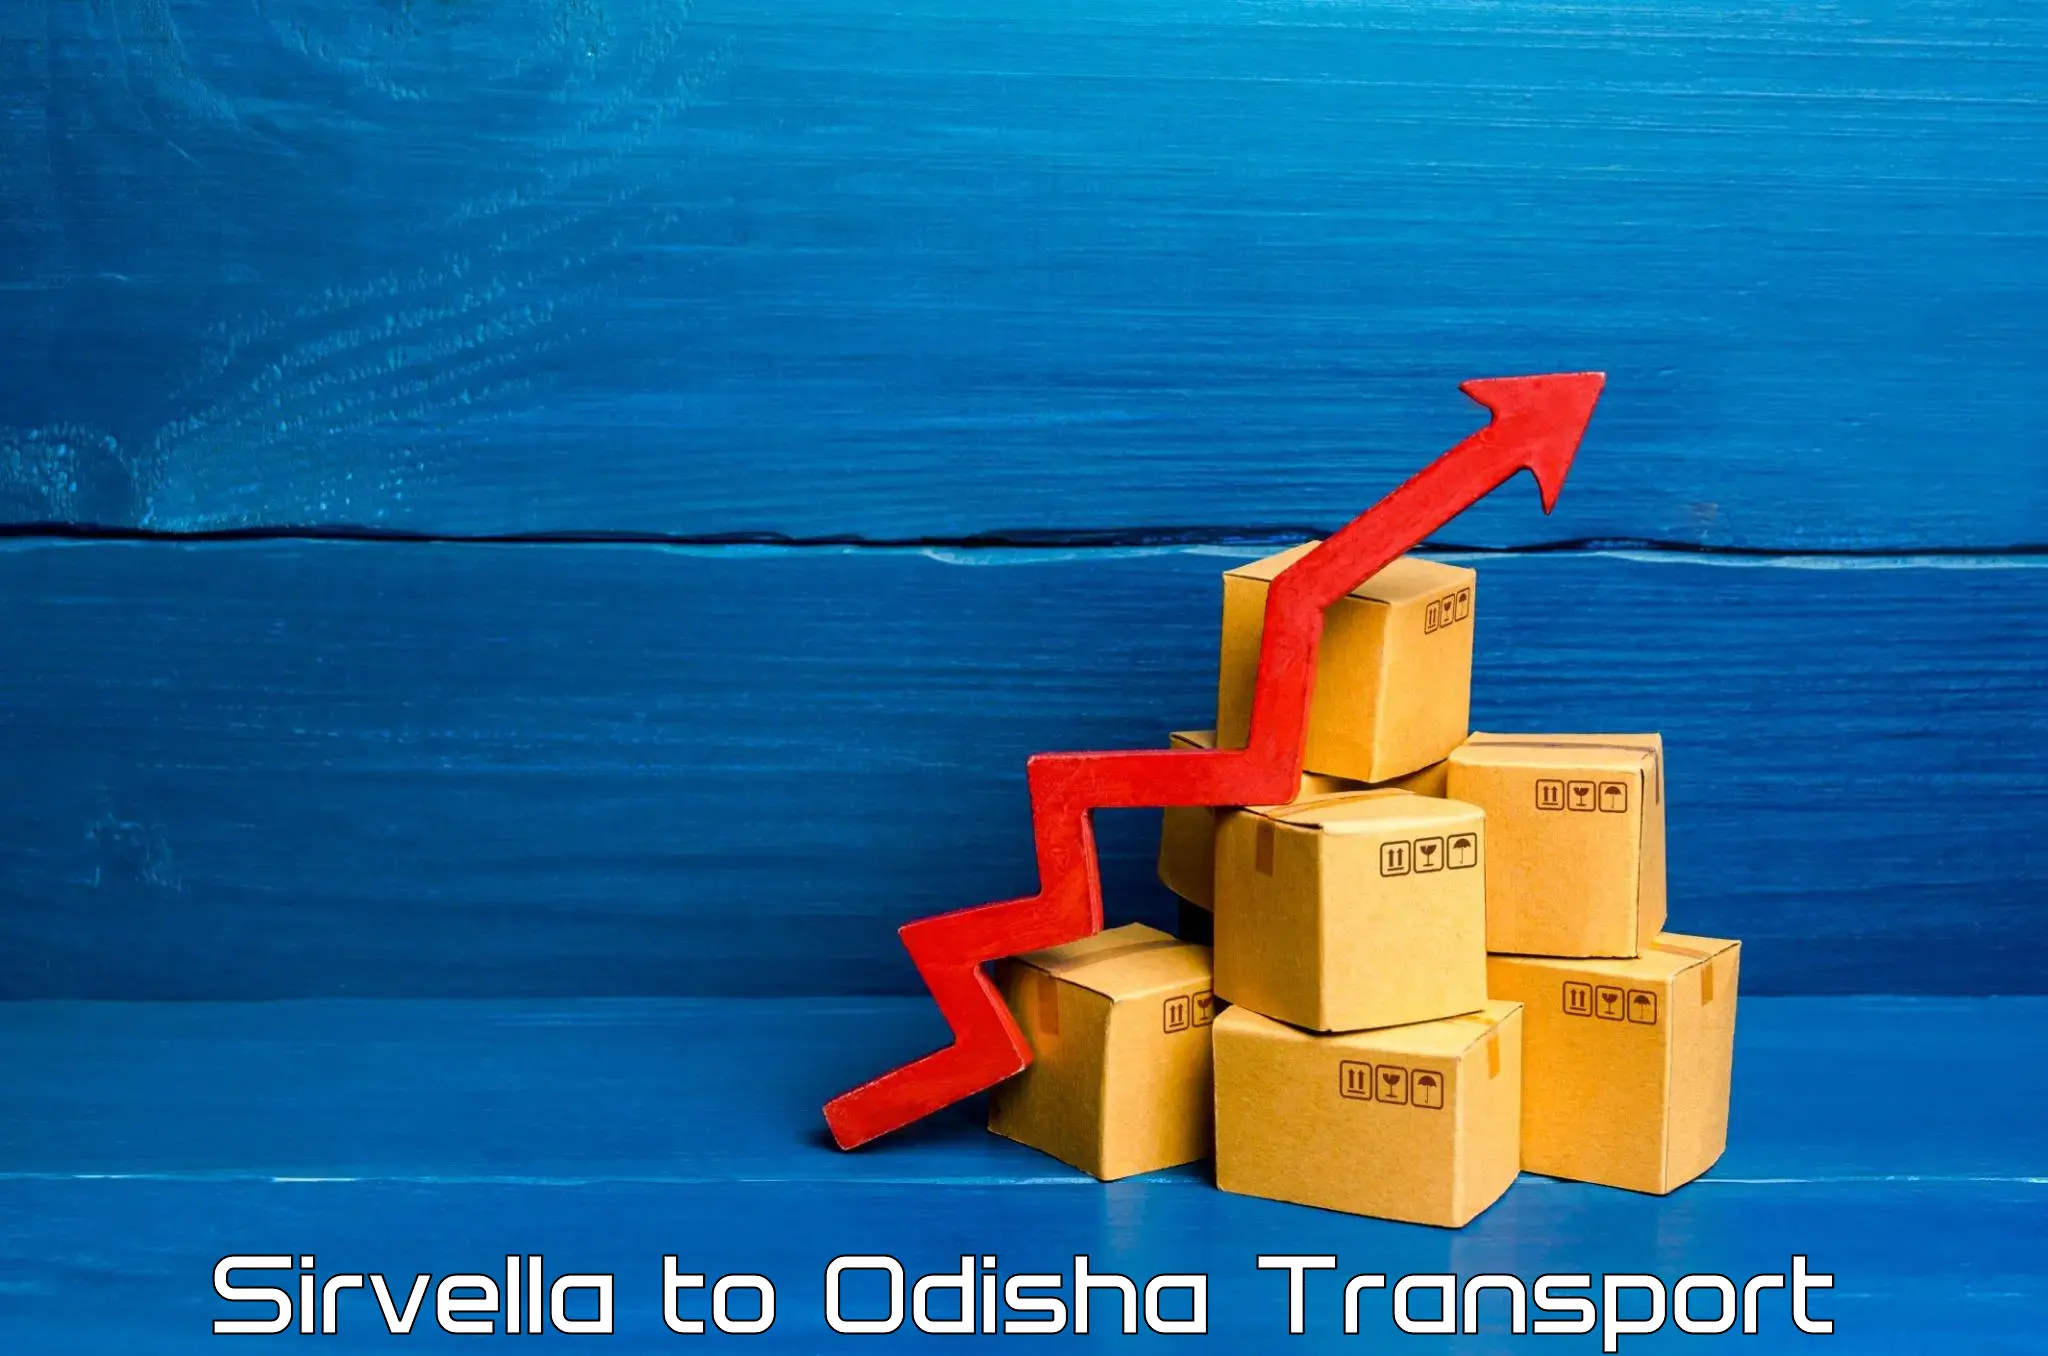 Furniture transport service Sirvella to Odisha